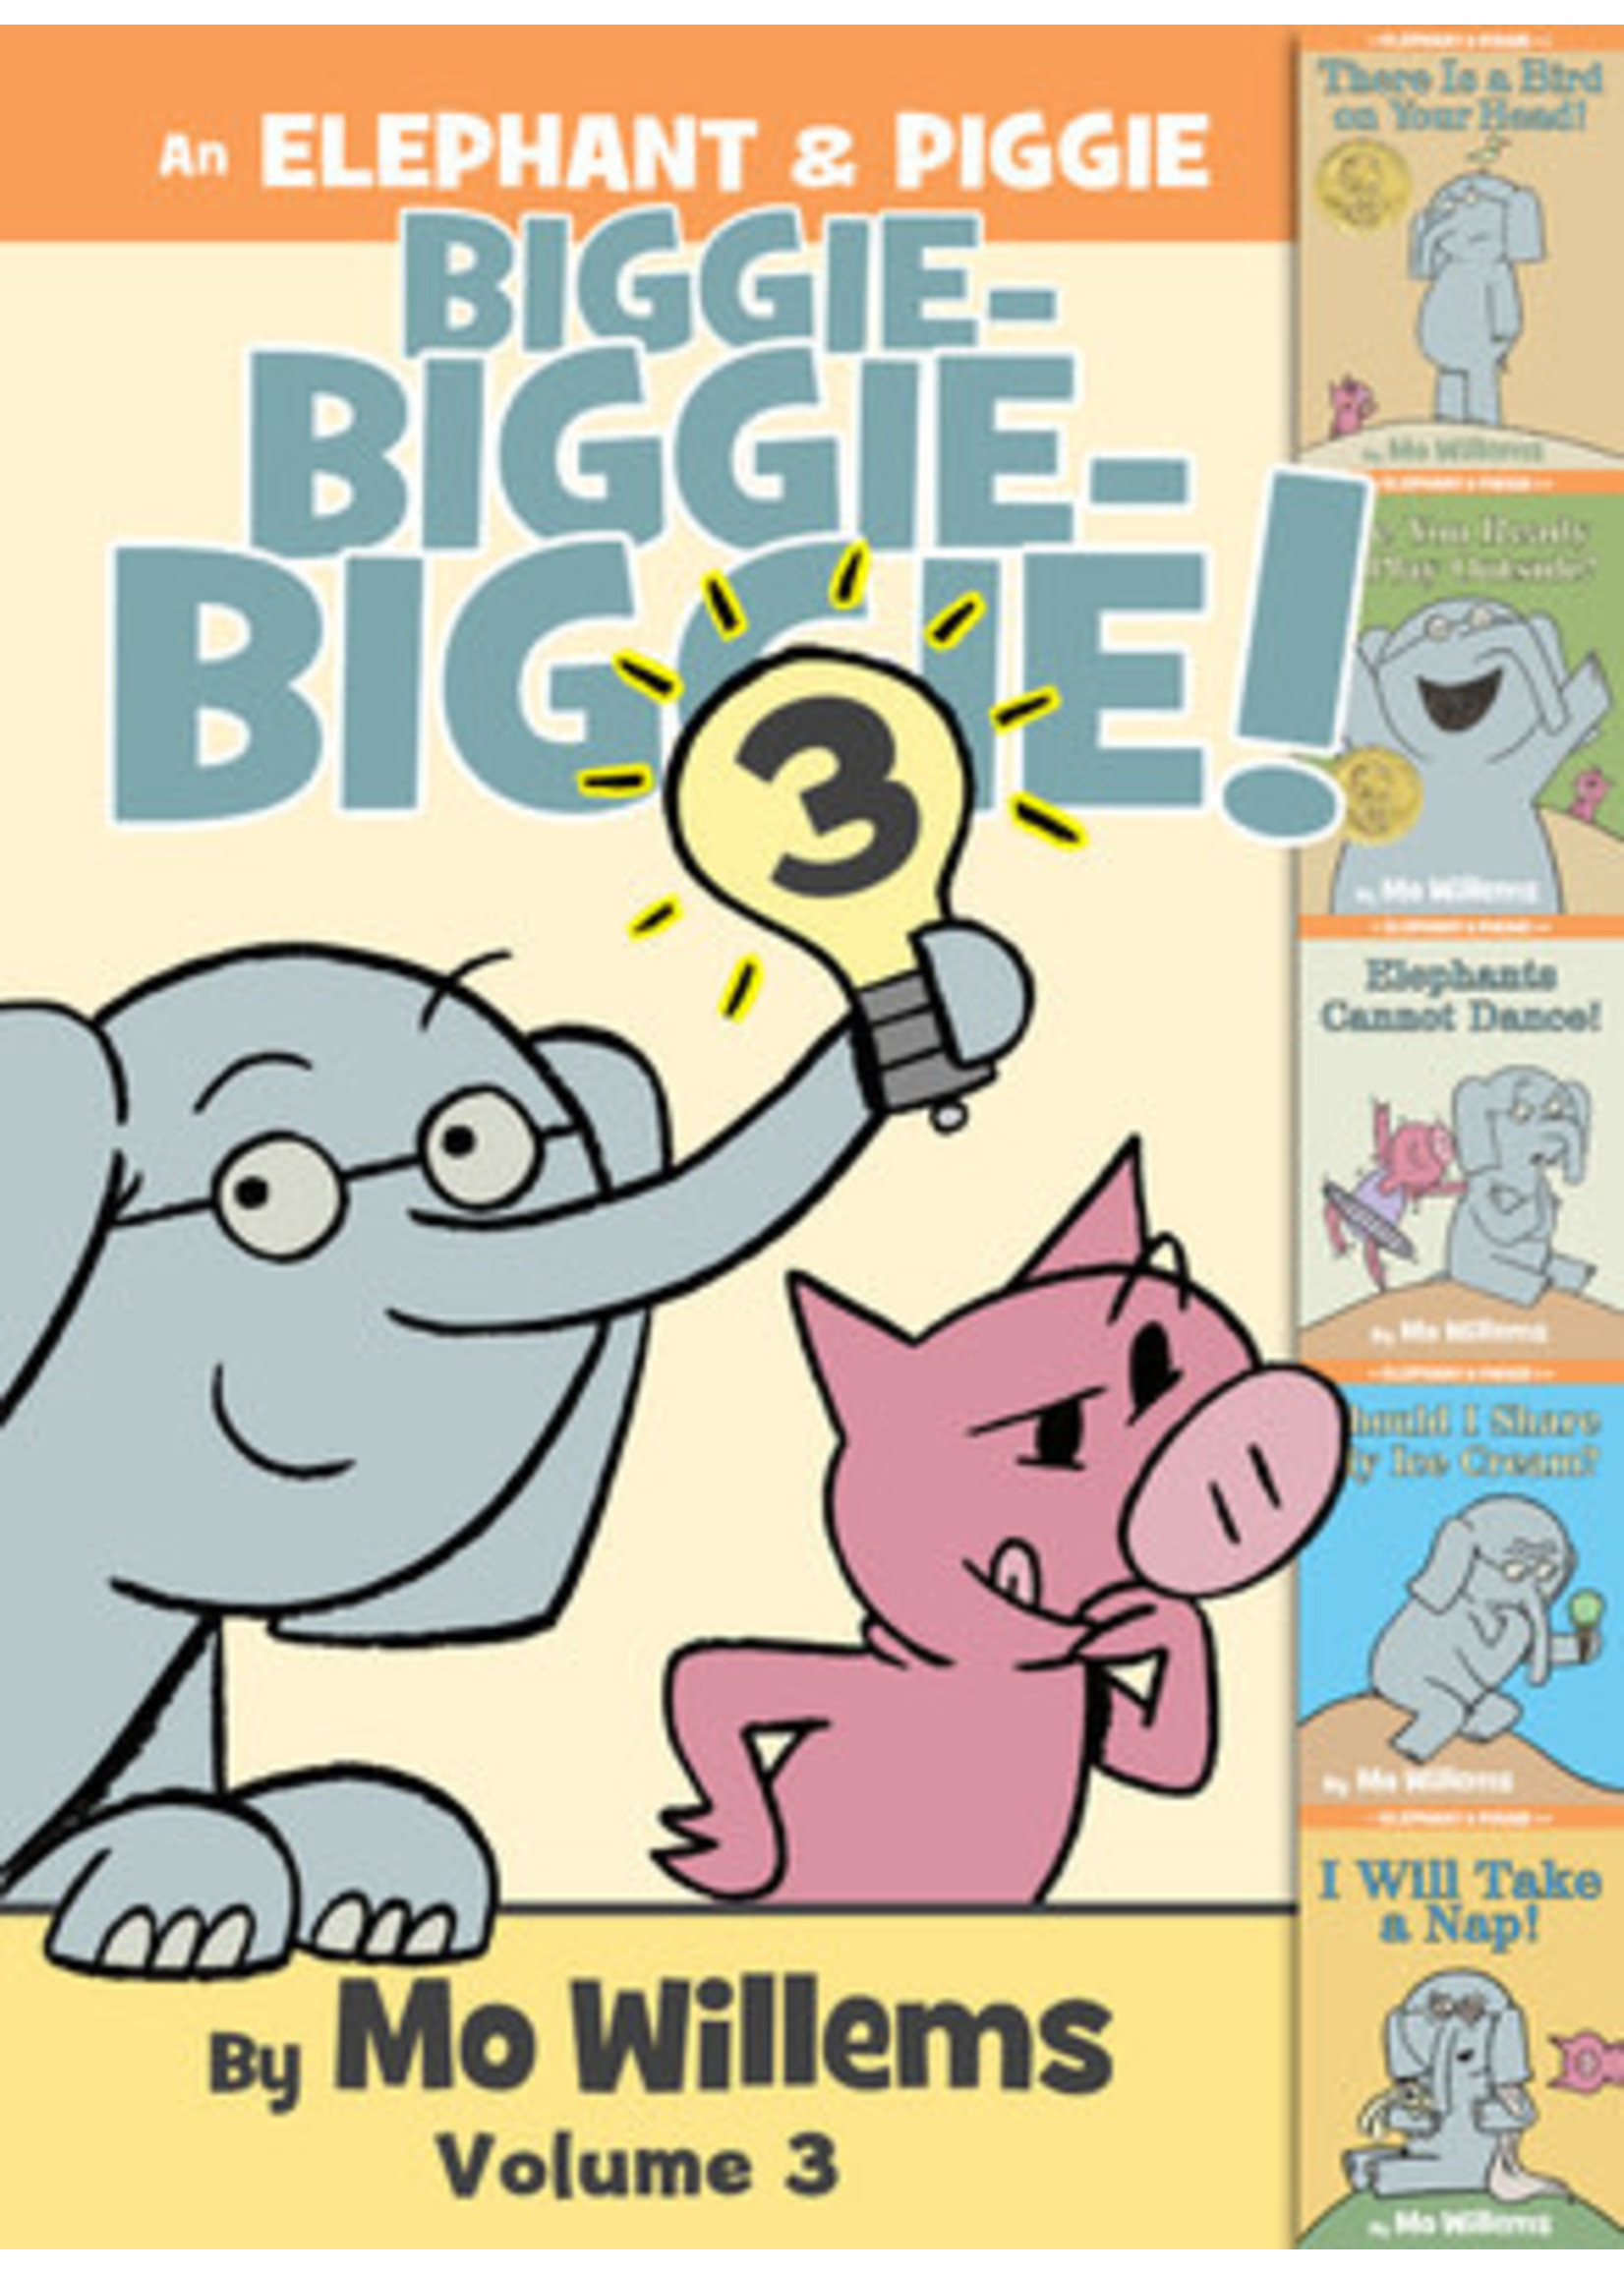 An Elephant & Piggie Biggie Volume 3 by Mo Willems